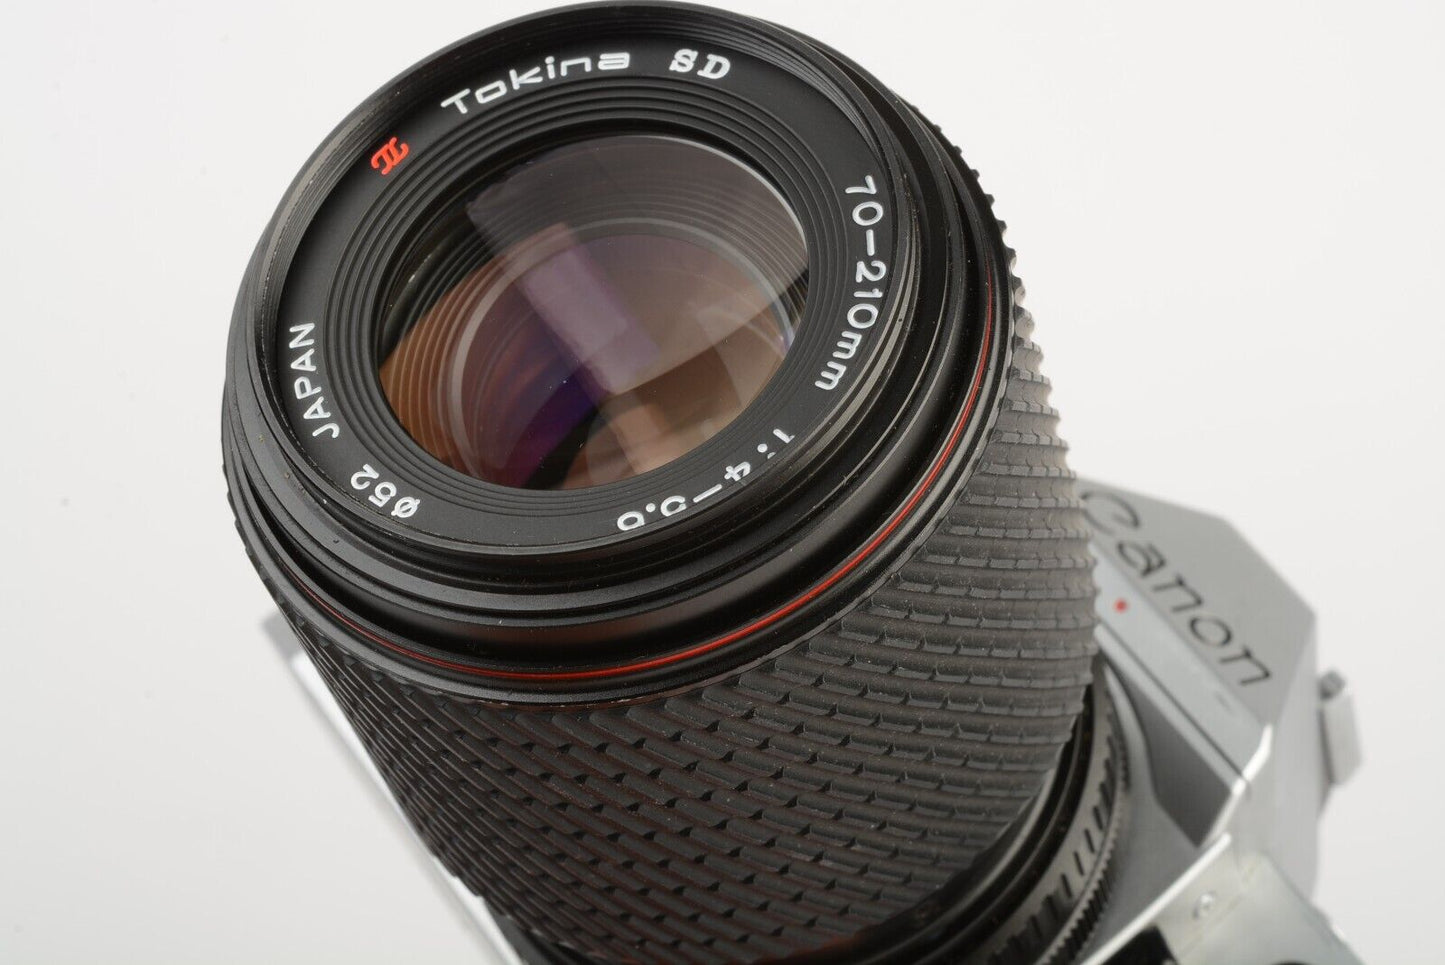 Canon AE-1 Program 35mm SLR w/70-210mm zoom FD, new seals